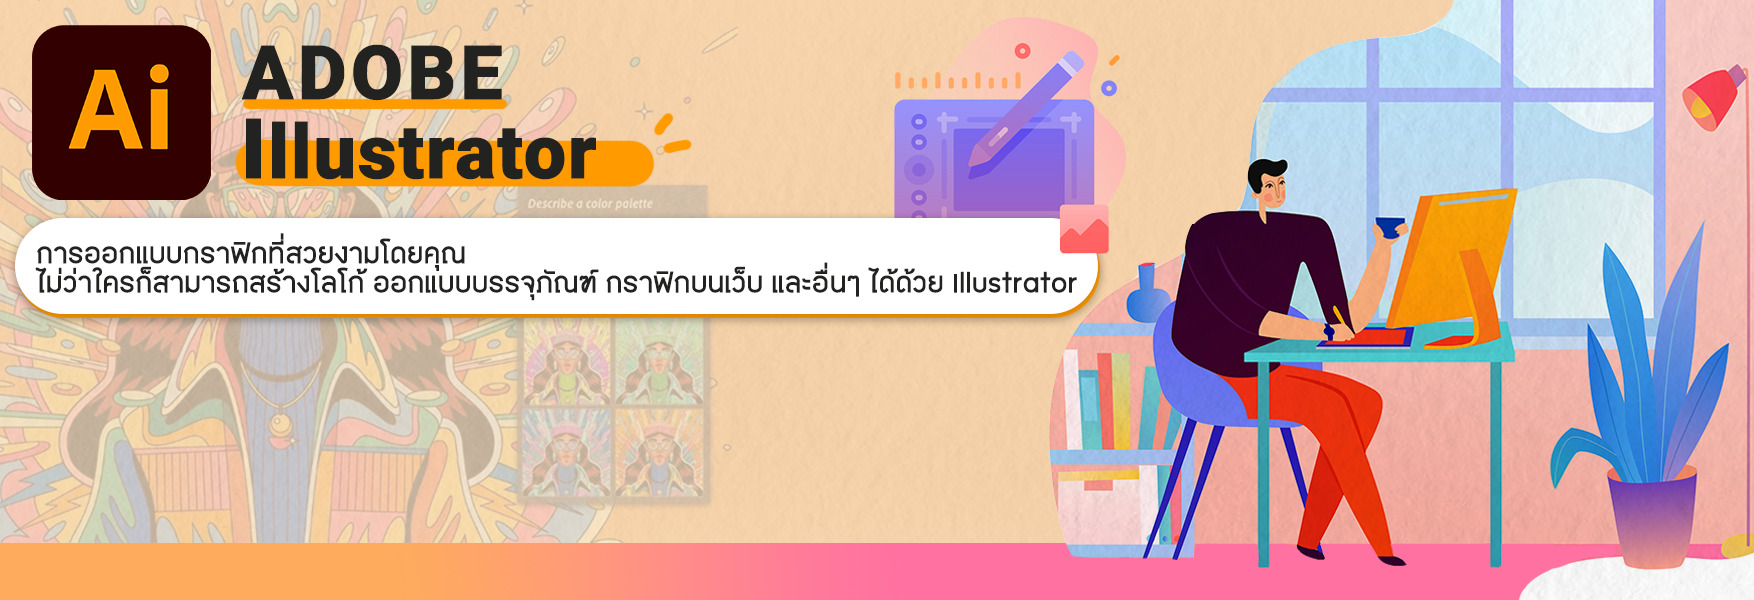 Adobe illustrator คืออะไร